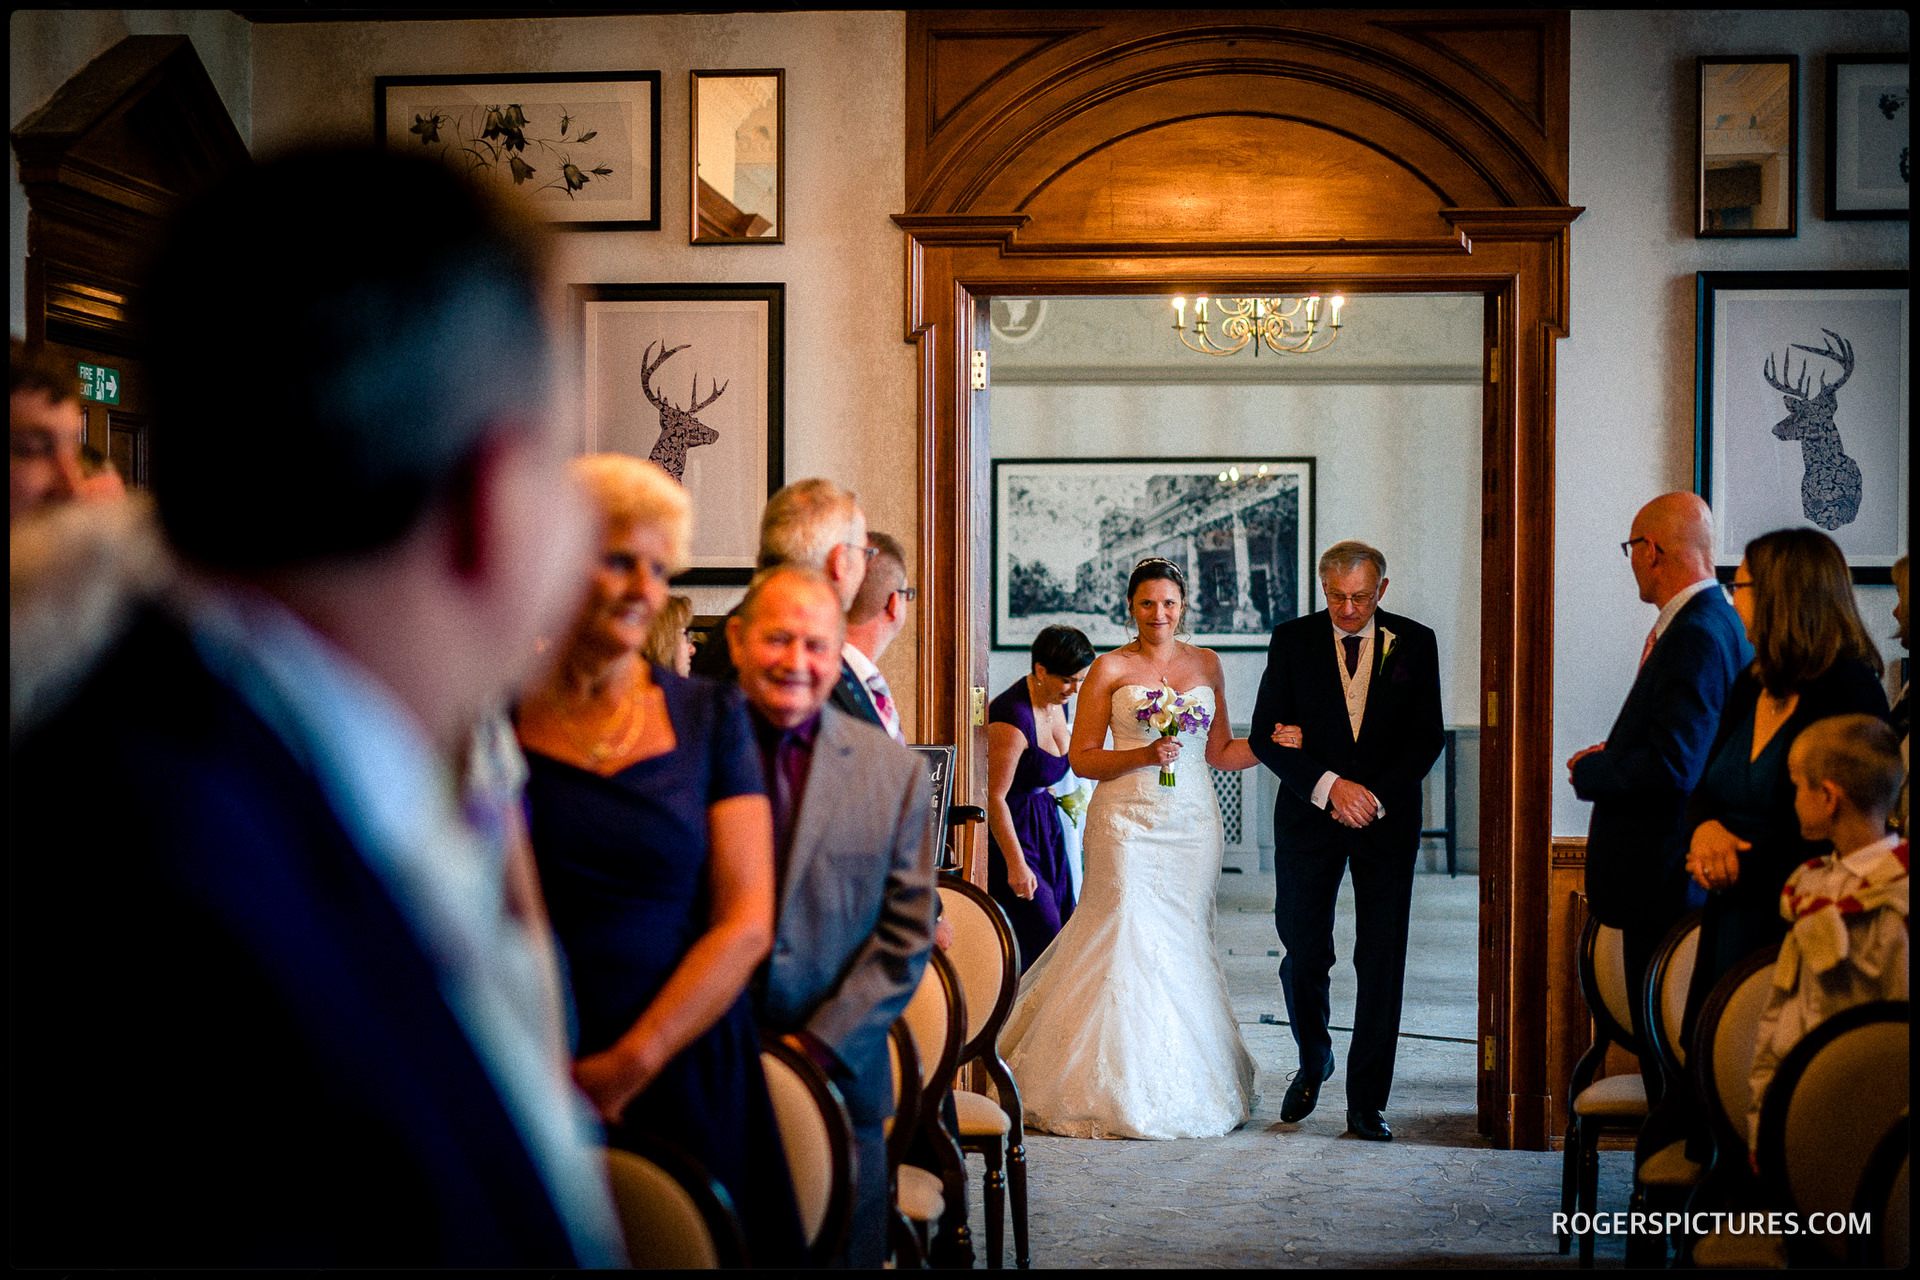 Wedding ceremony at Wokefield Park hotel in Berkshire